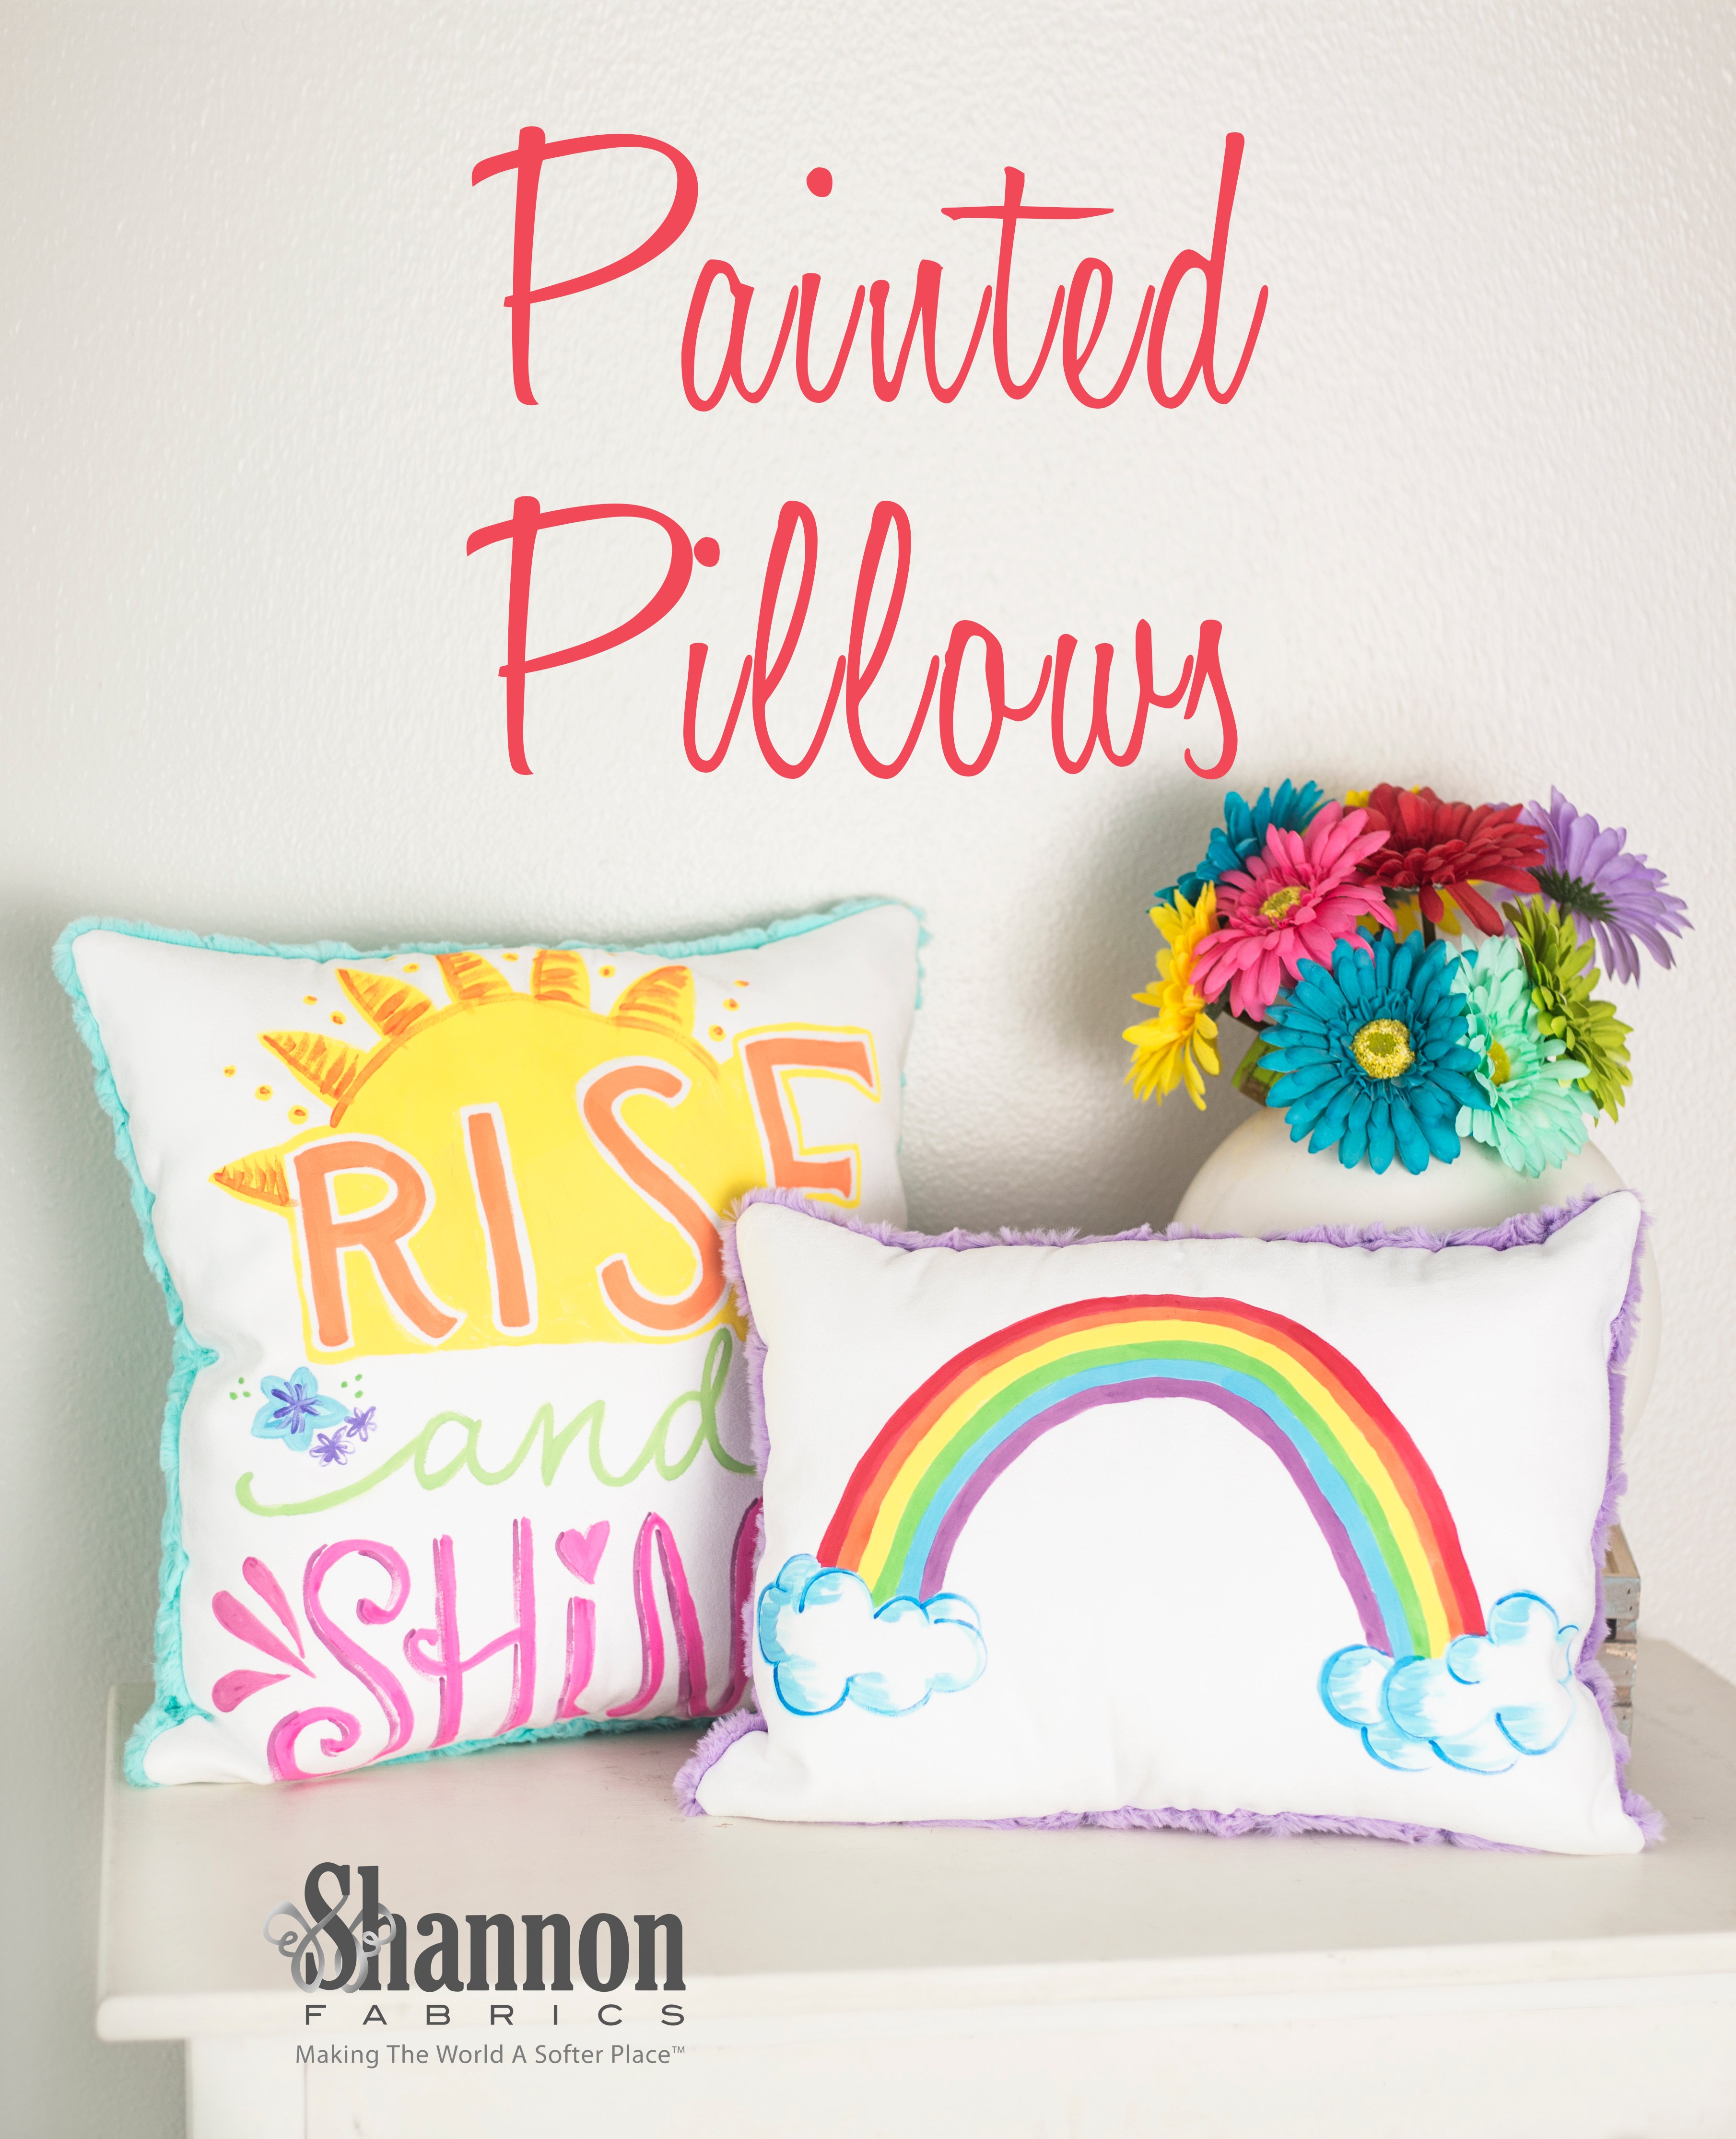 https://blog.shannonfabrics.com/hs-fs/hubfs/Imported_Blog_Media/Painted-Pillows-in-Cuddle-2.jpg?width=3620&height=4460&name=Painted-Pillows-in-Cuddle-2.jpg